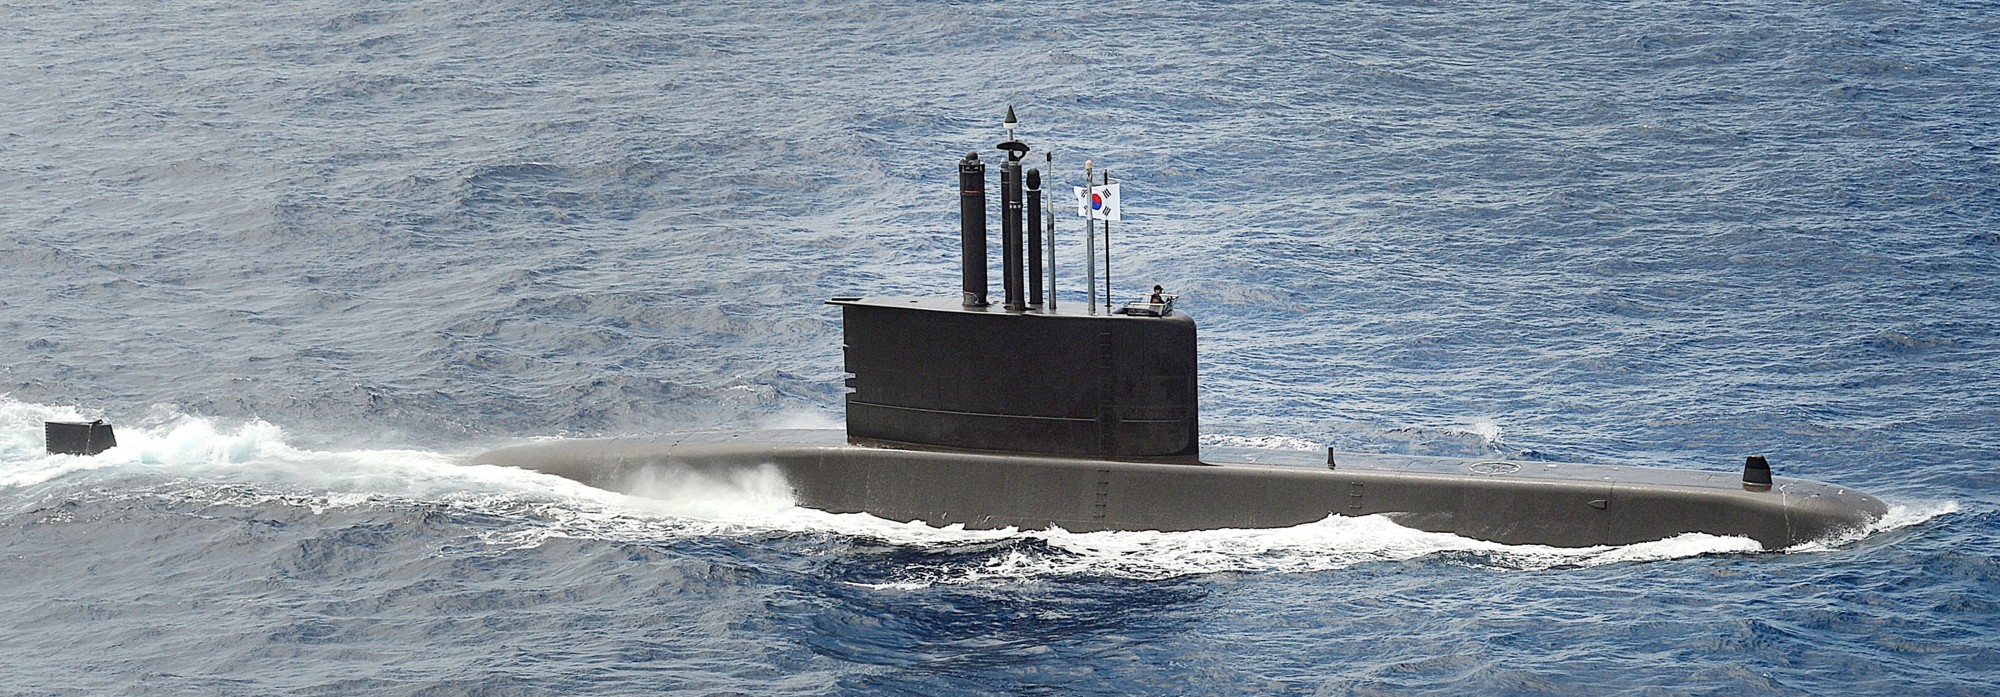 ss-068 roks yi sunsin jang bogo class kss-i type 209-1200 attack submarine republic of korea navy rokn 533mm sut torpedo ugm-84 harpoon ssm 04